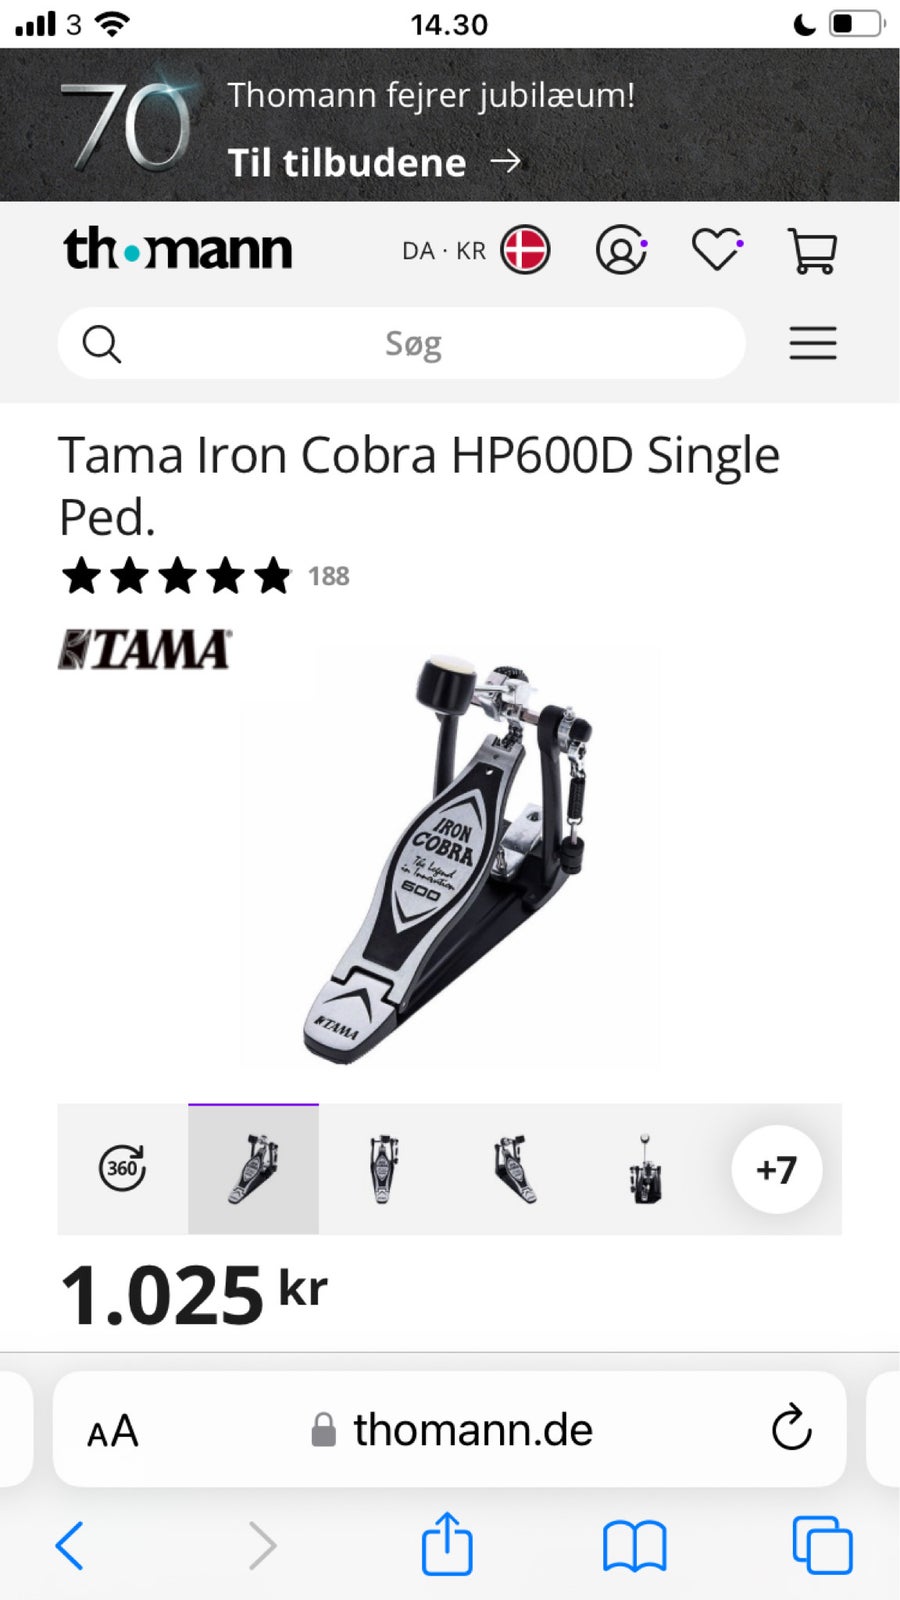 Andet, Tama Iron Cobra HP600D